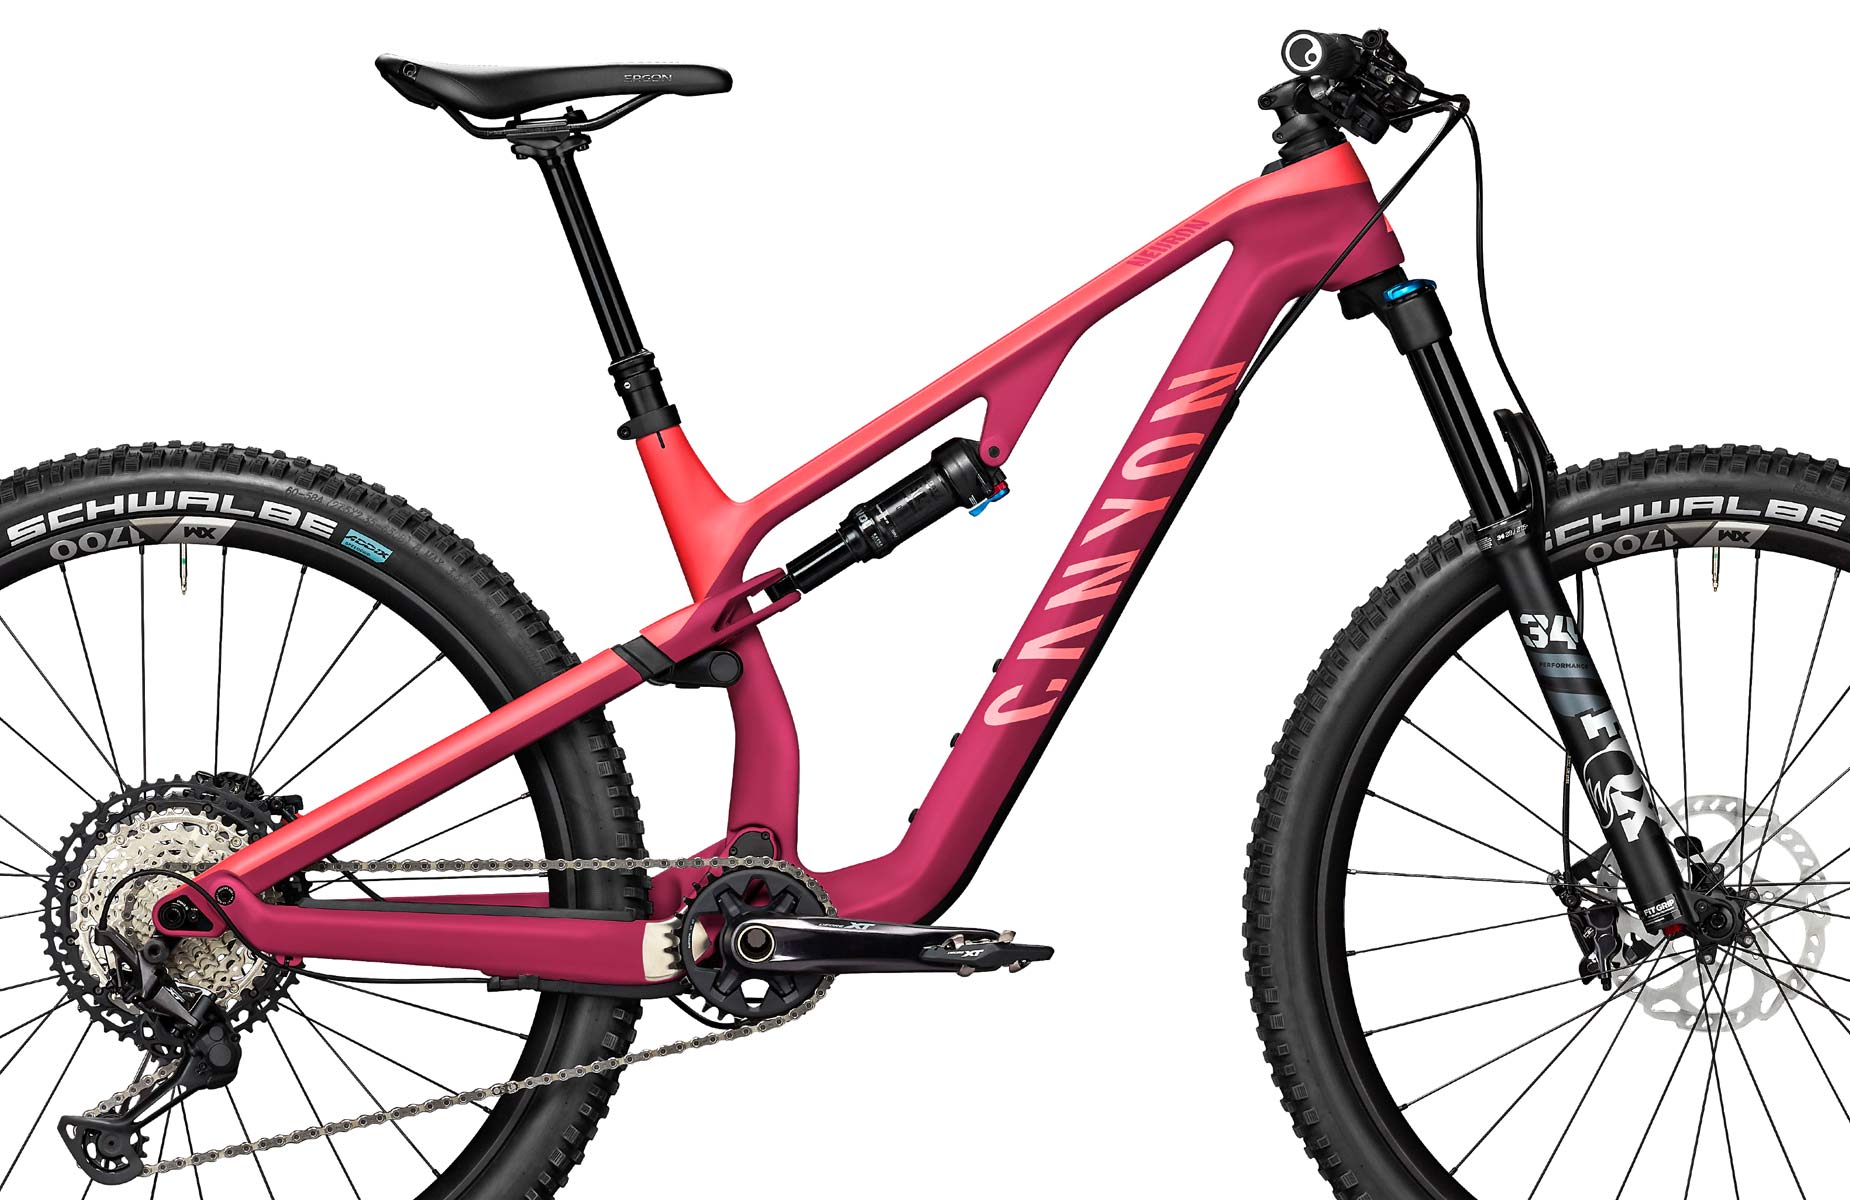 2021 Canyon Neuron mountain bike, 29er 27.5" 130mm all-mountain trail bike in alloy or carbon, WMN frame detail